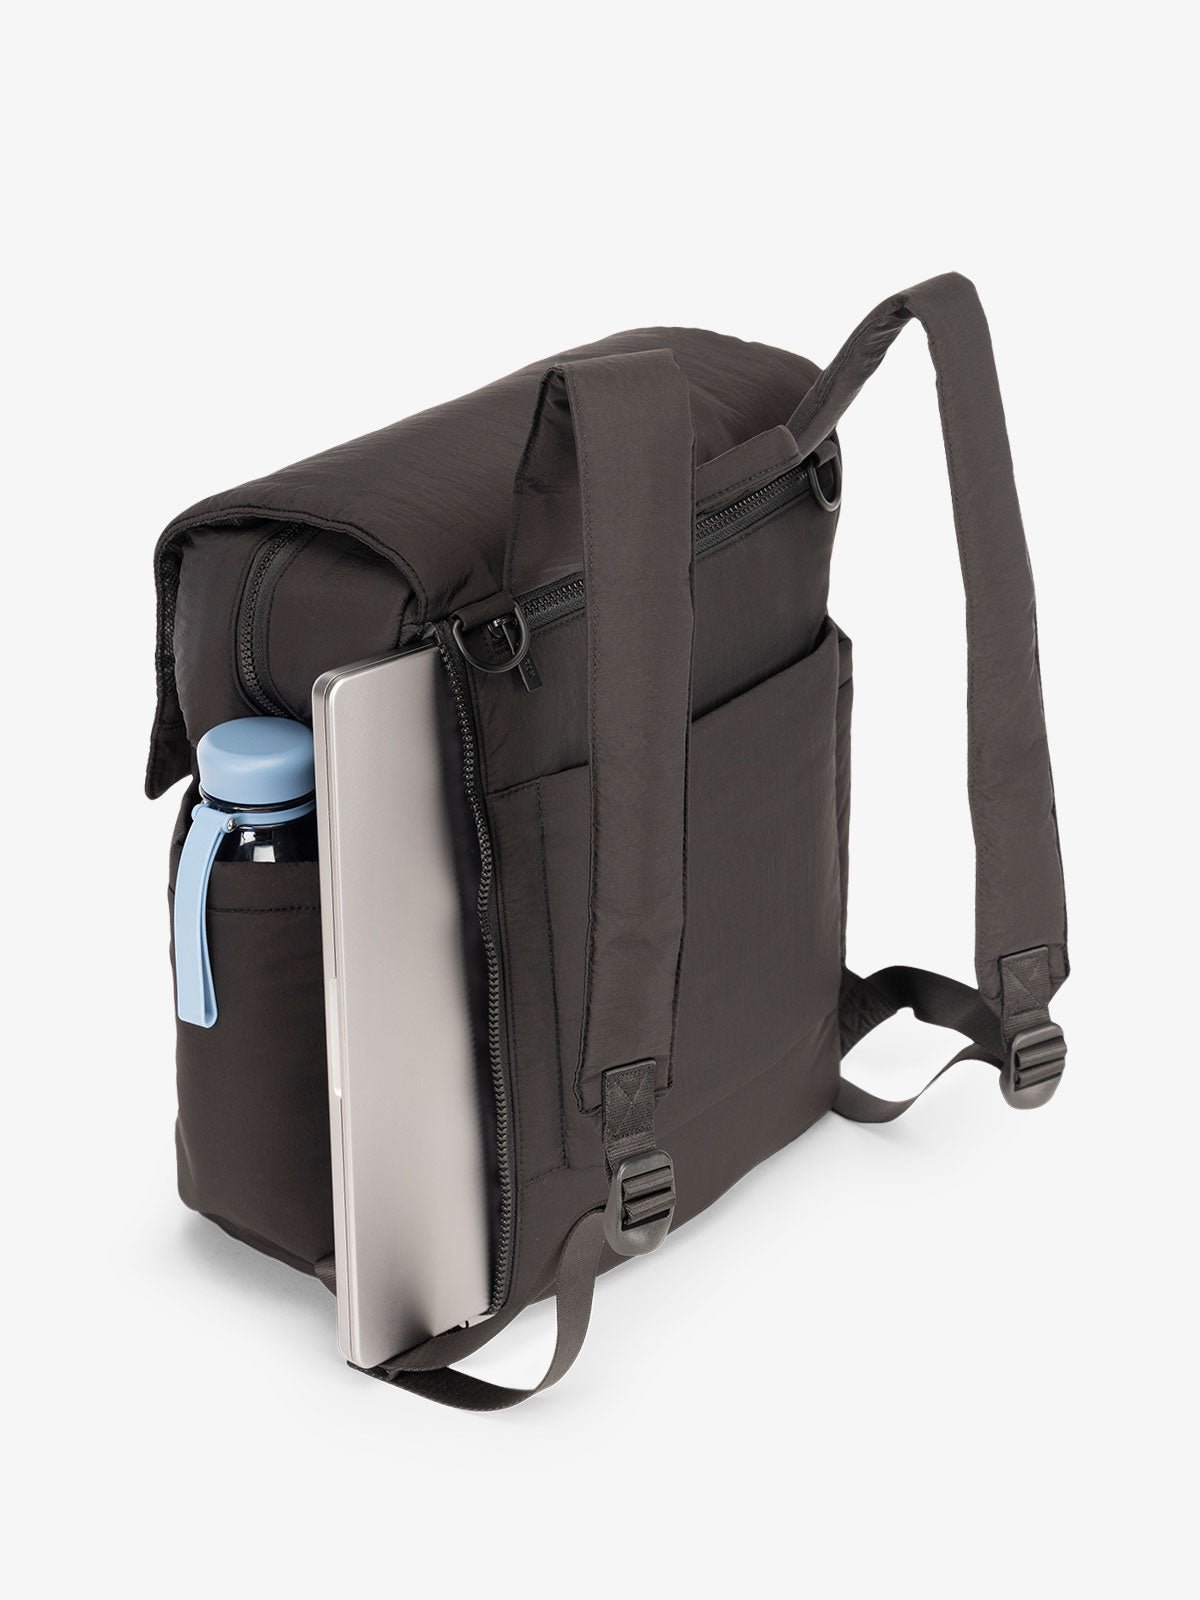 Black CALPAK diaper backpack with 14 inch laptop sleeve and adjustable shoulder straps